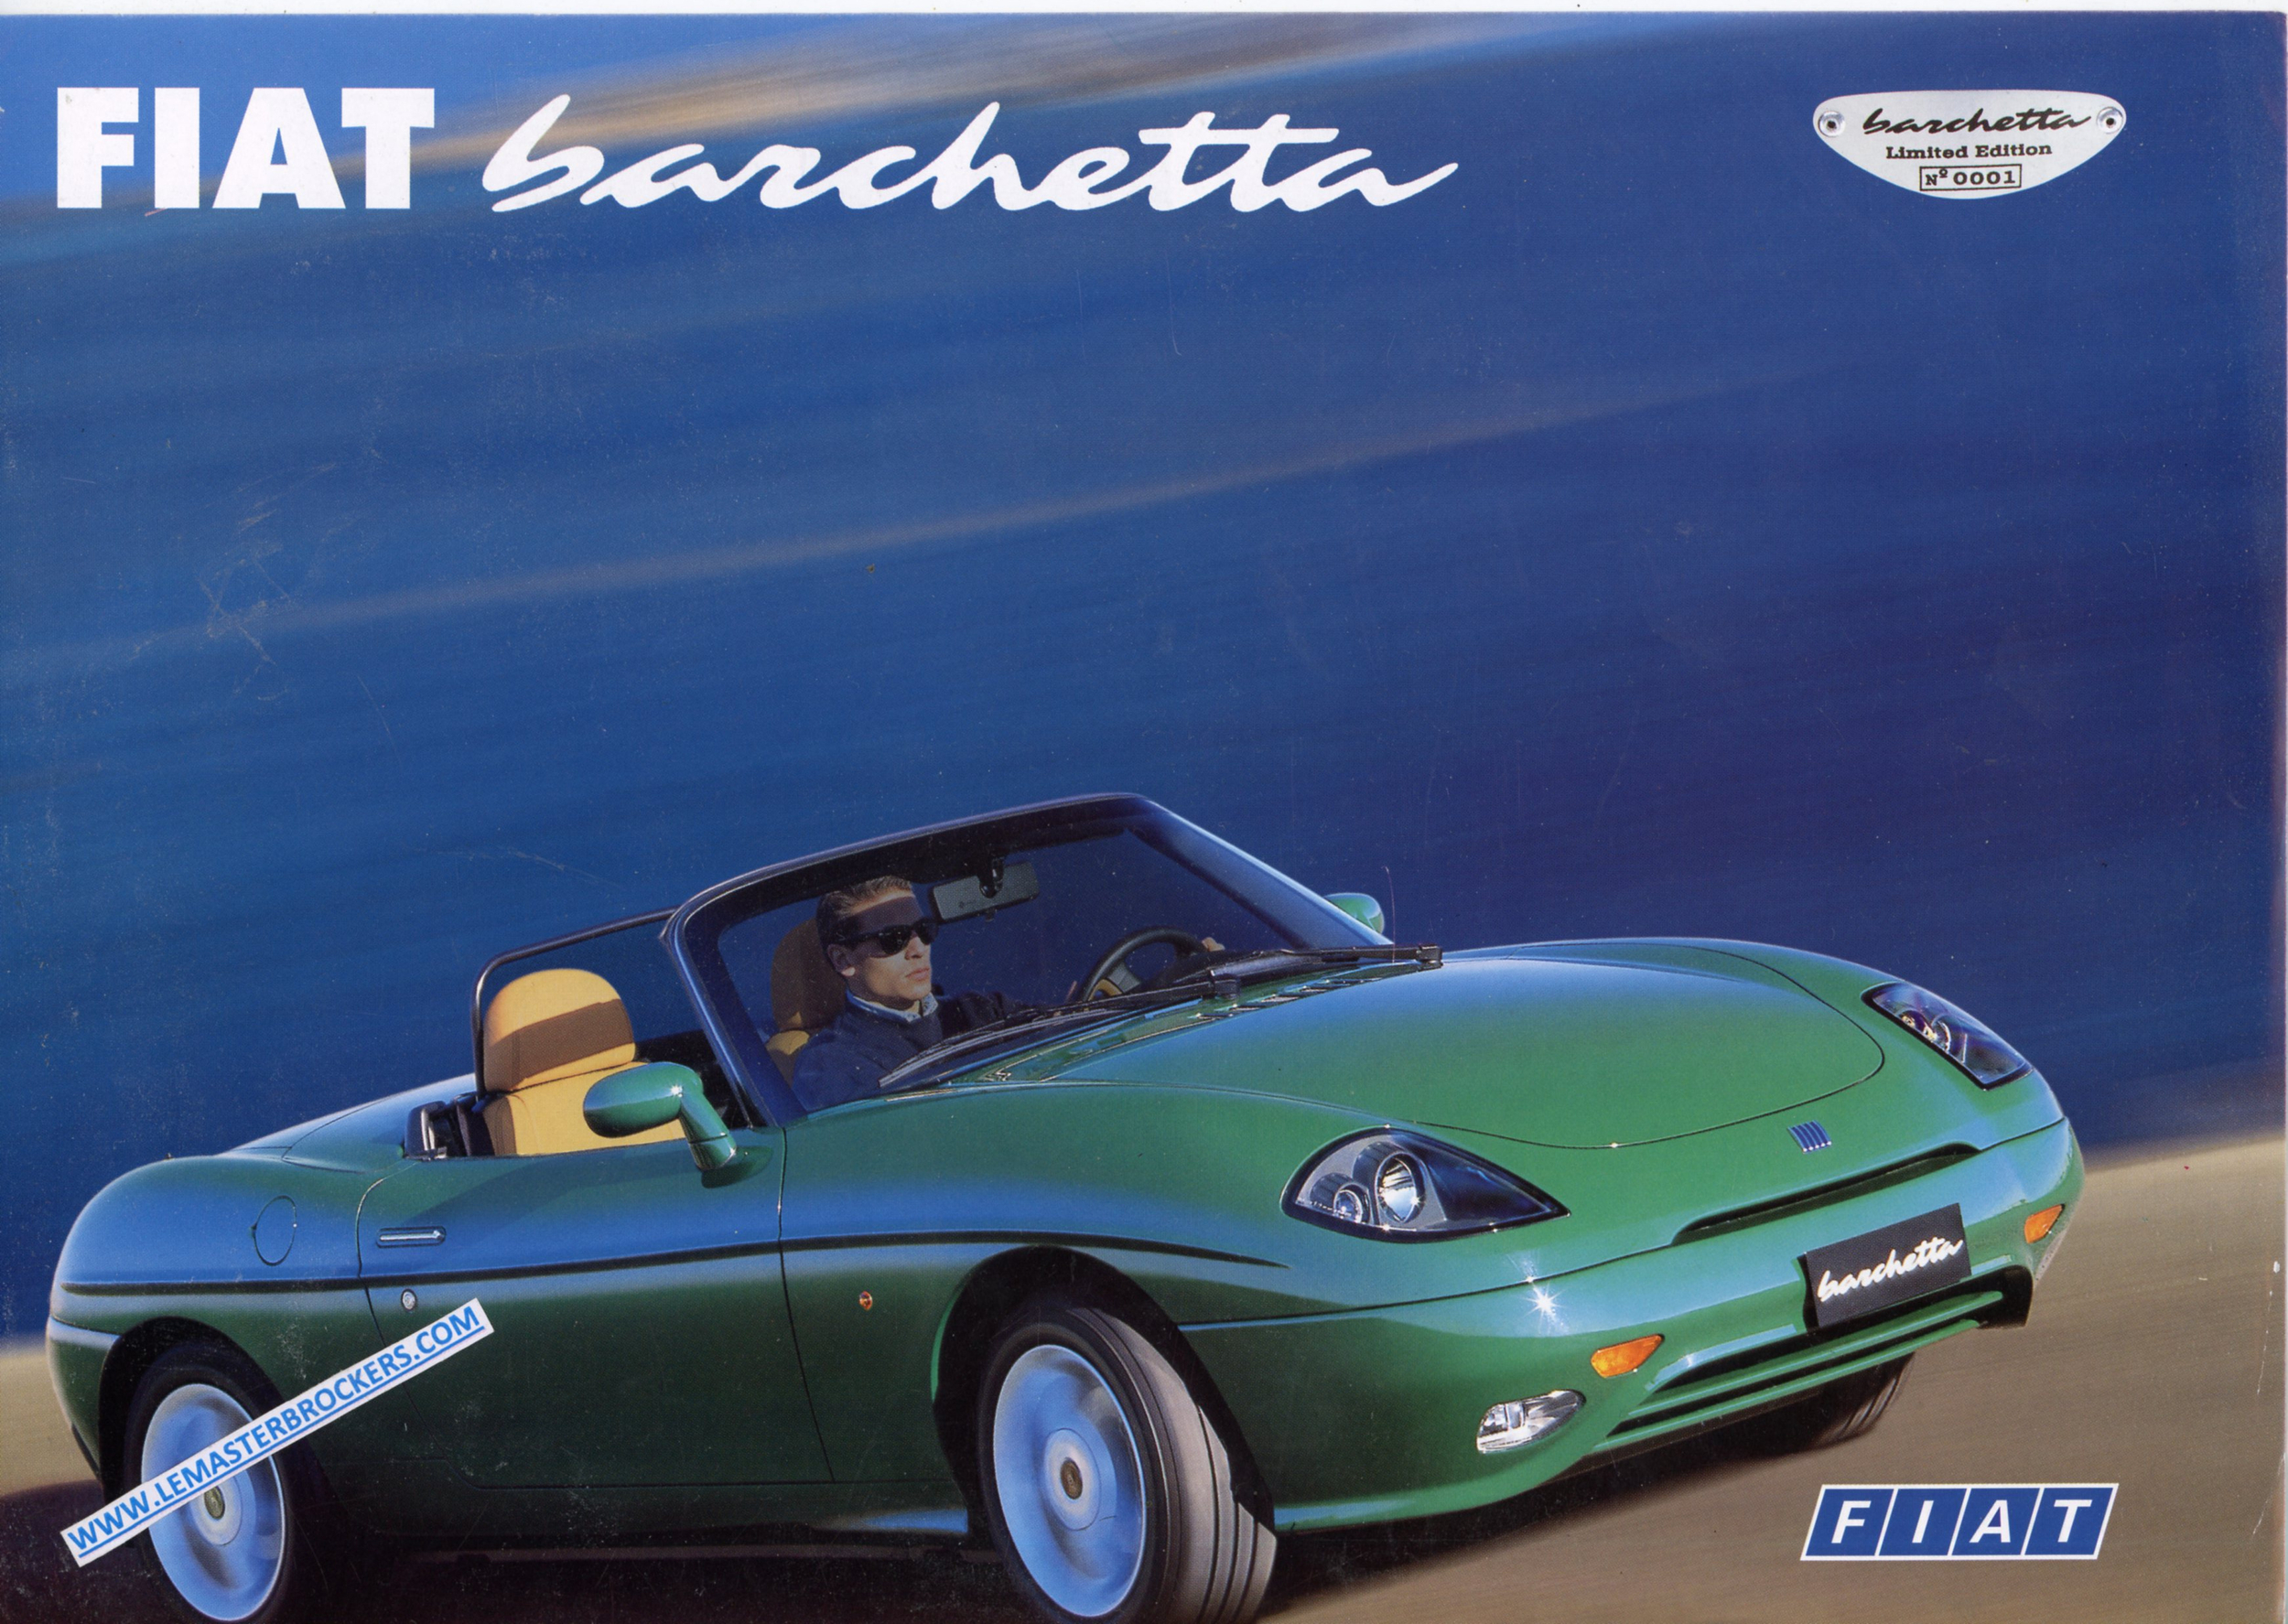 PROSPECTUS-AUTO-FIAT-BARCHETTA-LIMITED-EDITION-1998-LEMASTERBROCKERS